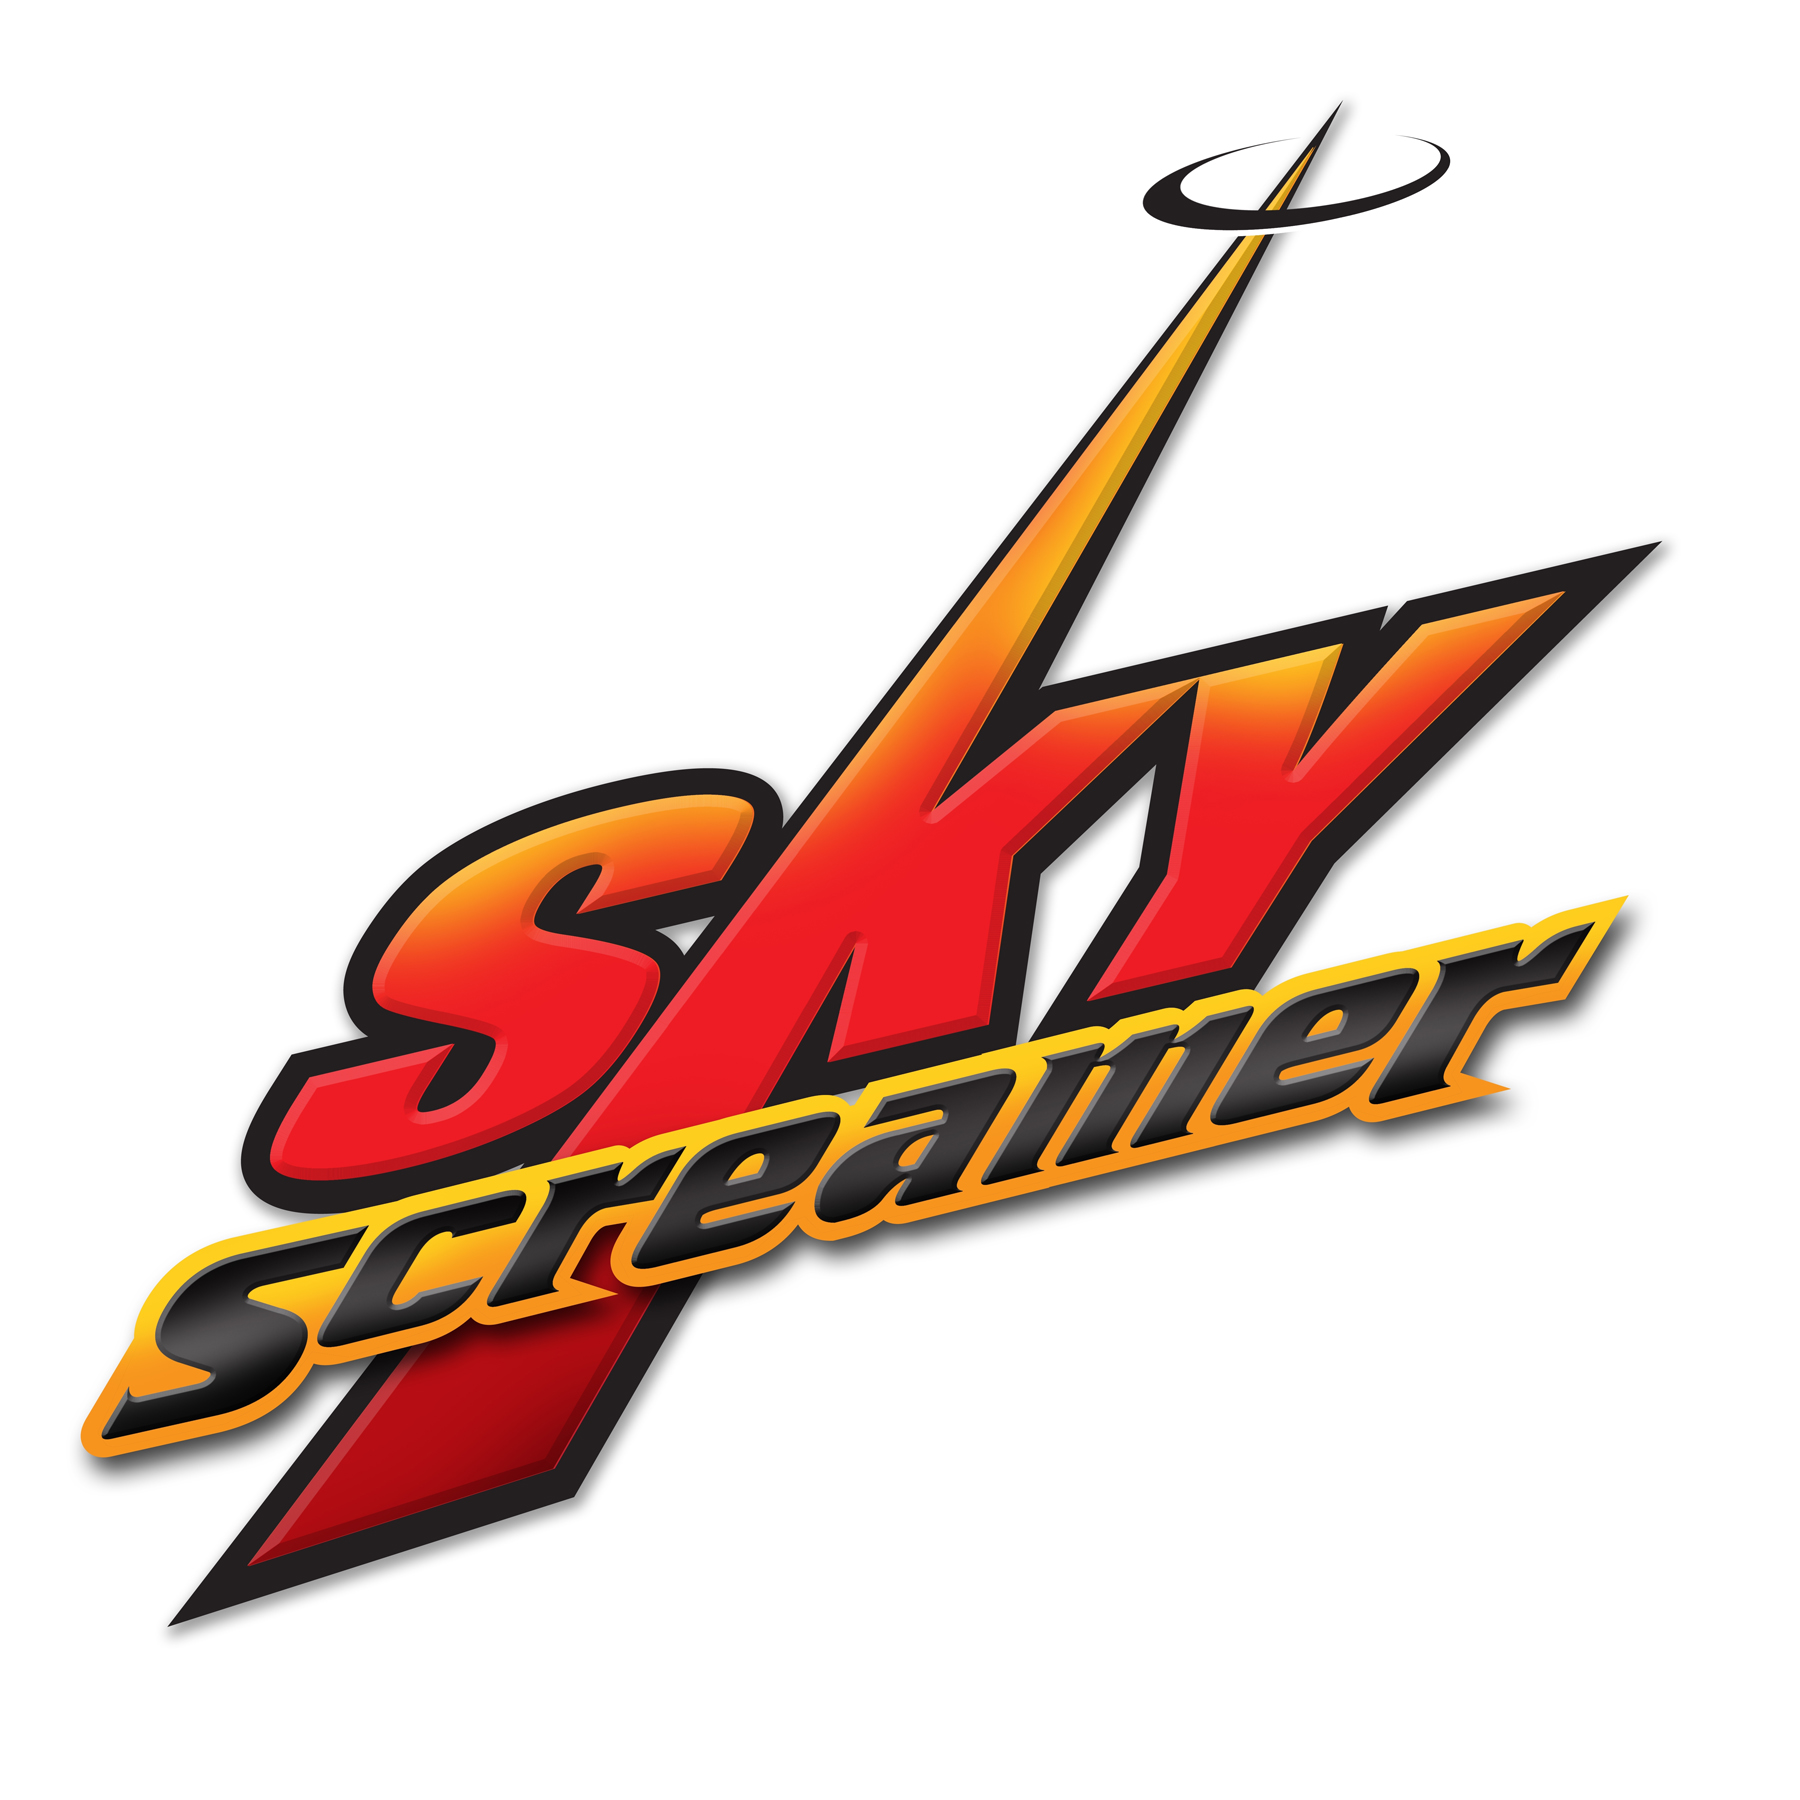 SkyScreamer logo - Six Flags Great Adventure's "Sky Screamer"